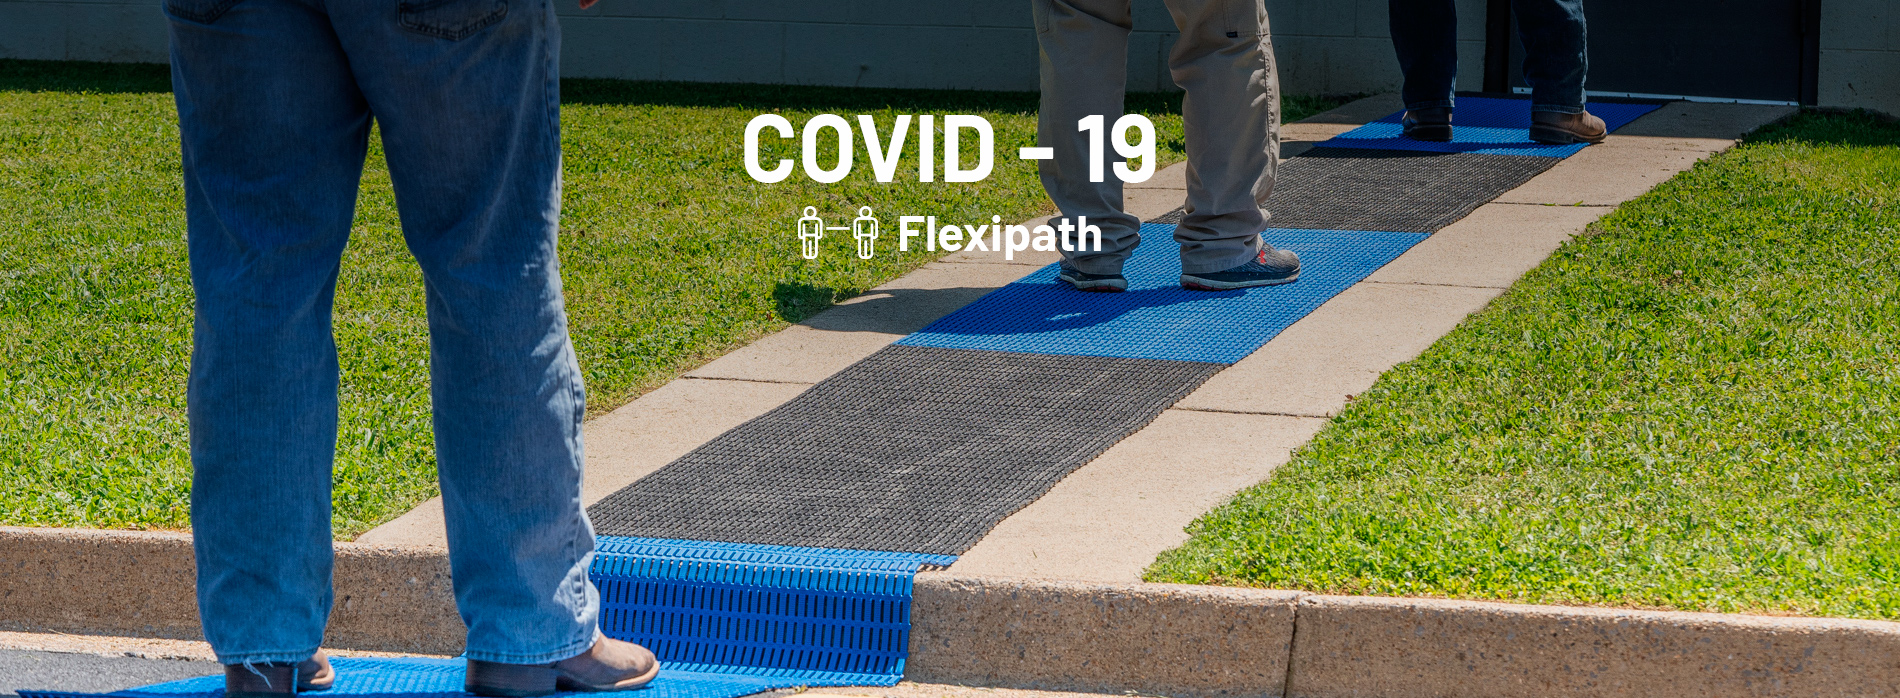 Flexipath COVID-19